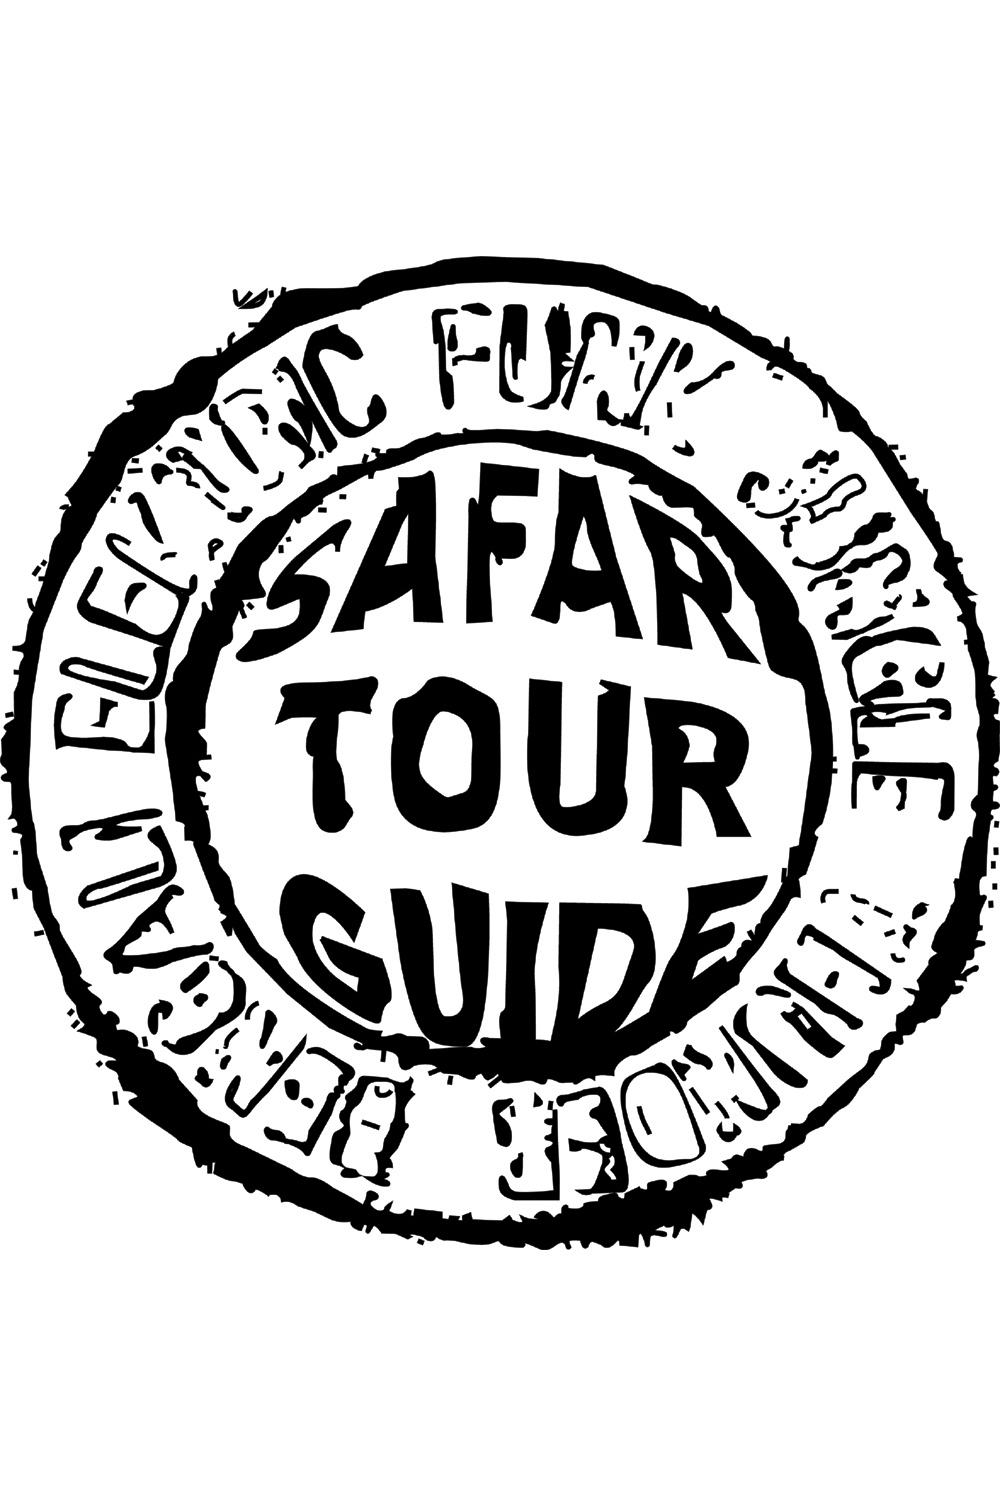 Safari Tour Guide T Shirt pinterest preview image.